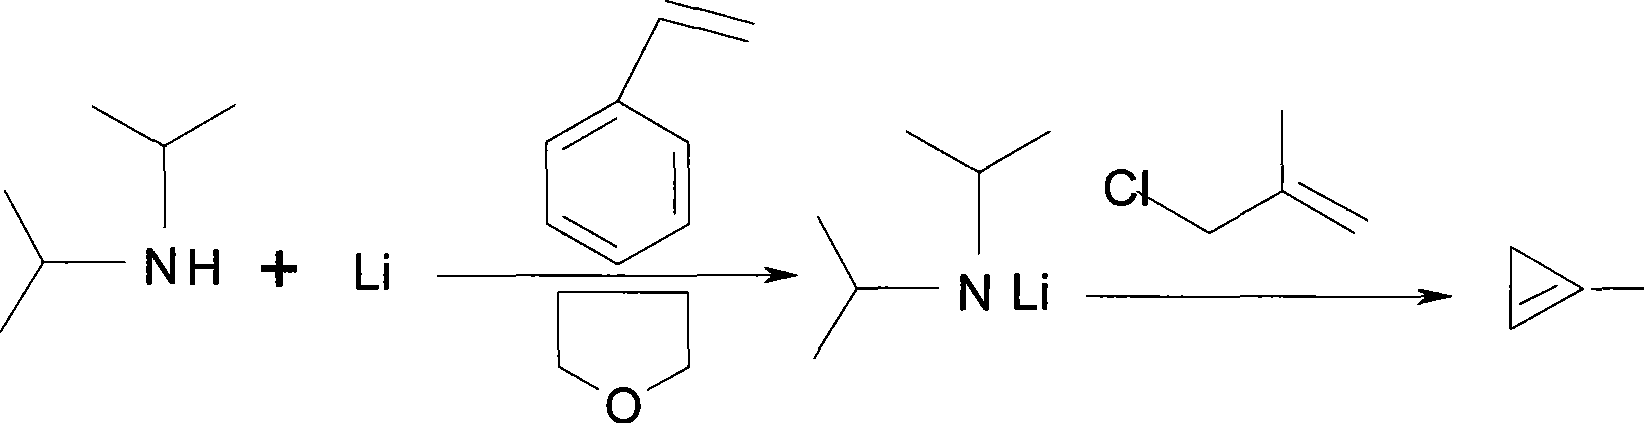 Use of lithium diisopropyl amido in 1-methyl cyclopropene preparation